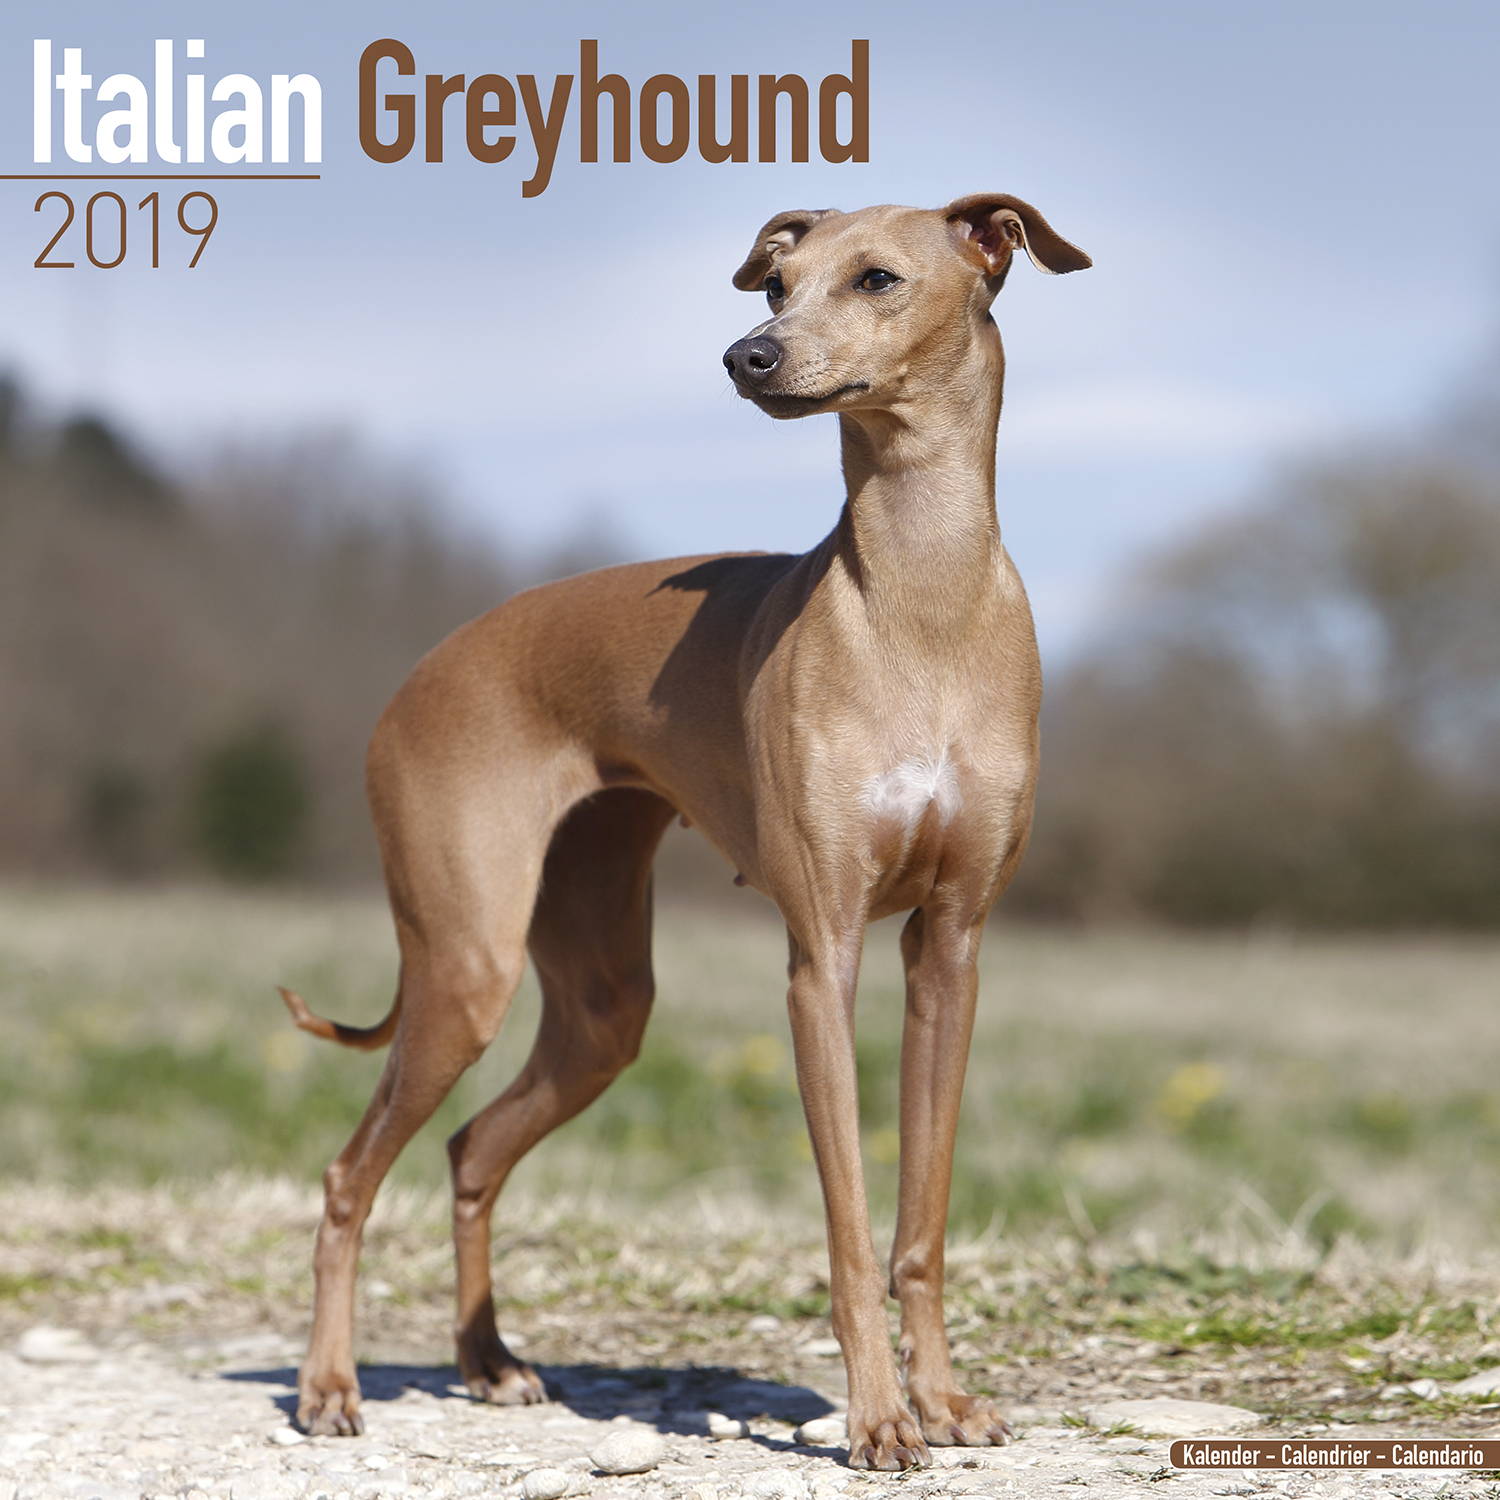 Italian Greyhound Calendar 2019 | Pet Prints Inc.
